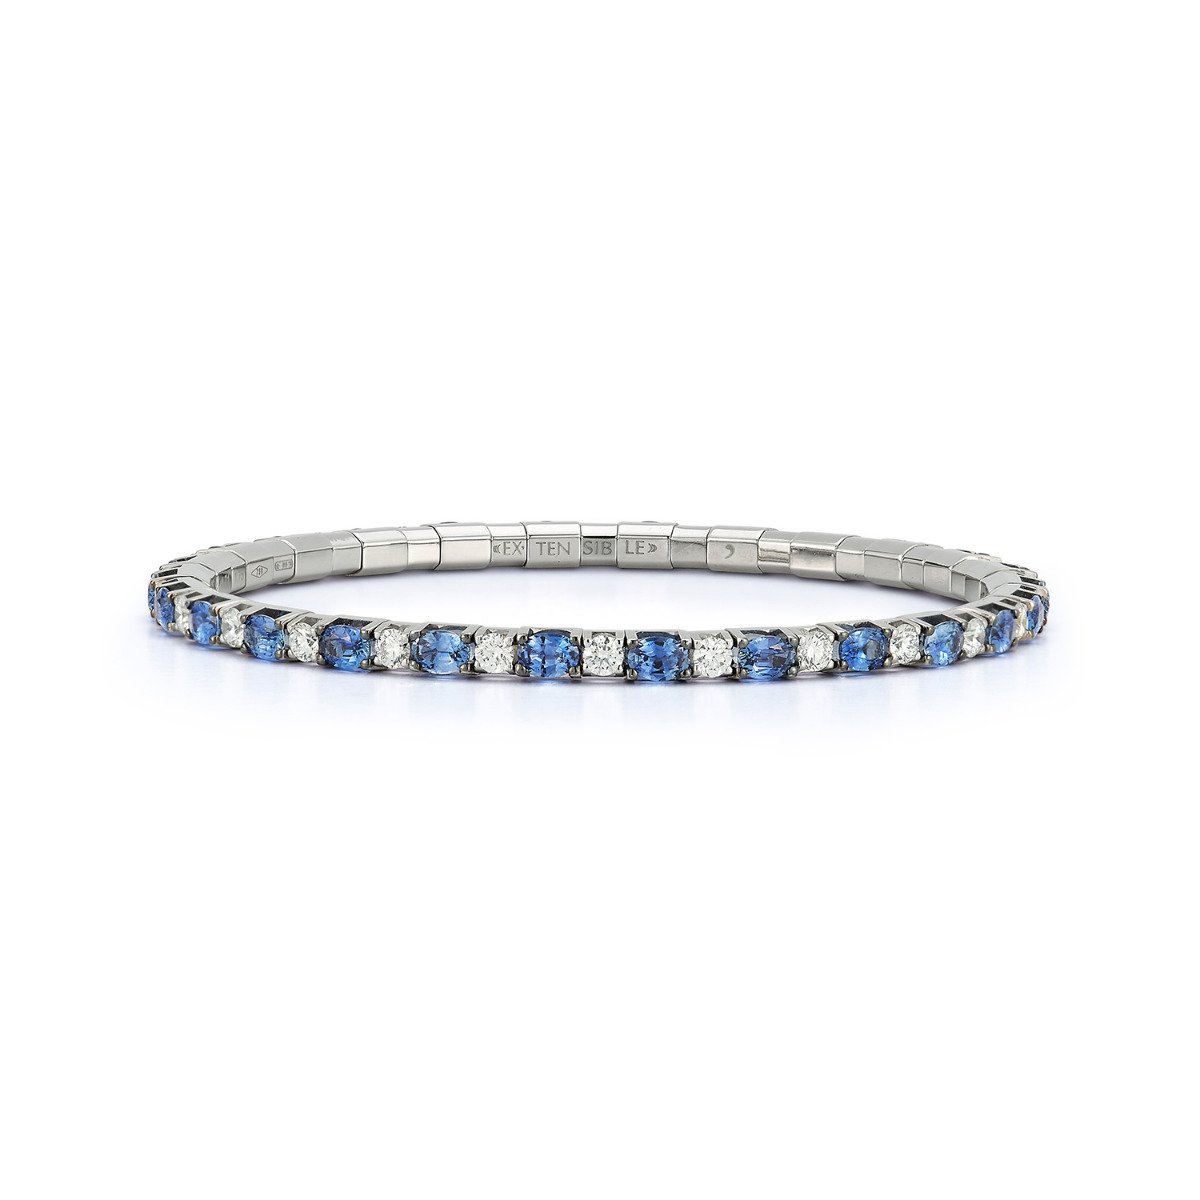 Roberto Demeglio "Extensible" Blue Sapphire & Diamond 18kt White Gold Stretch Bracelet